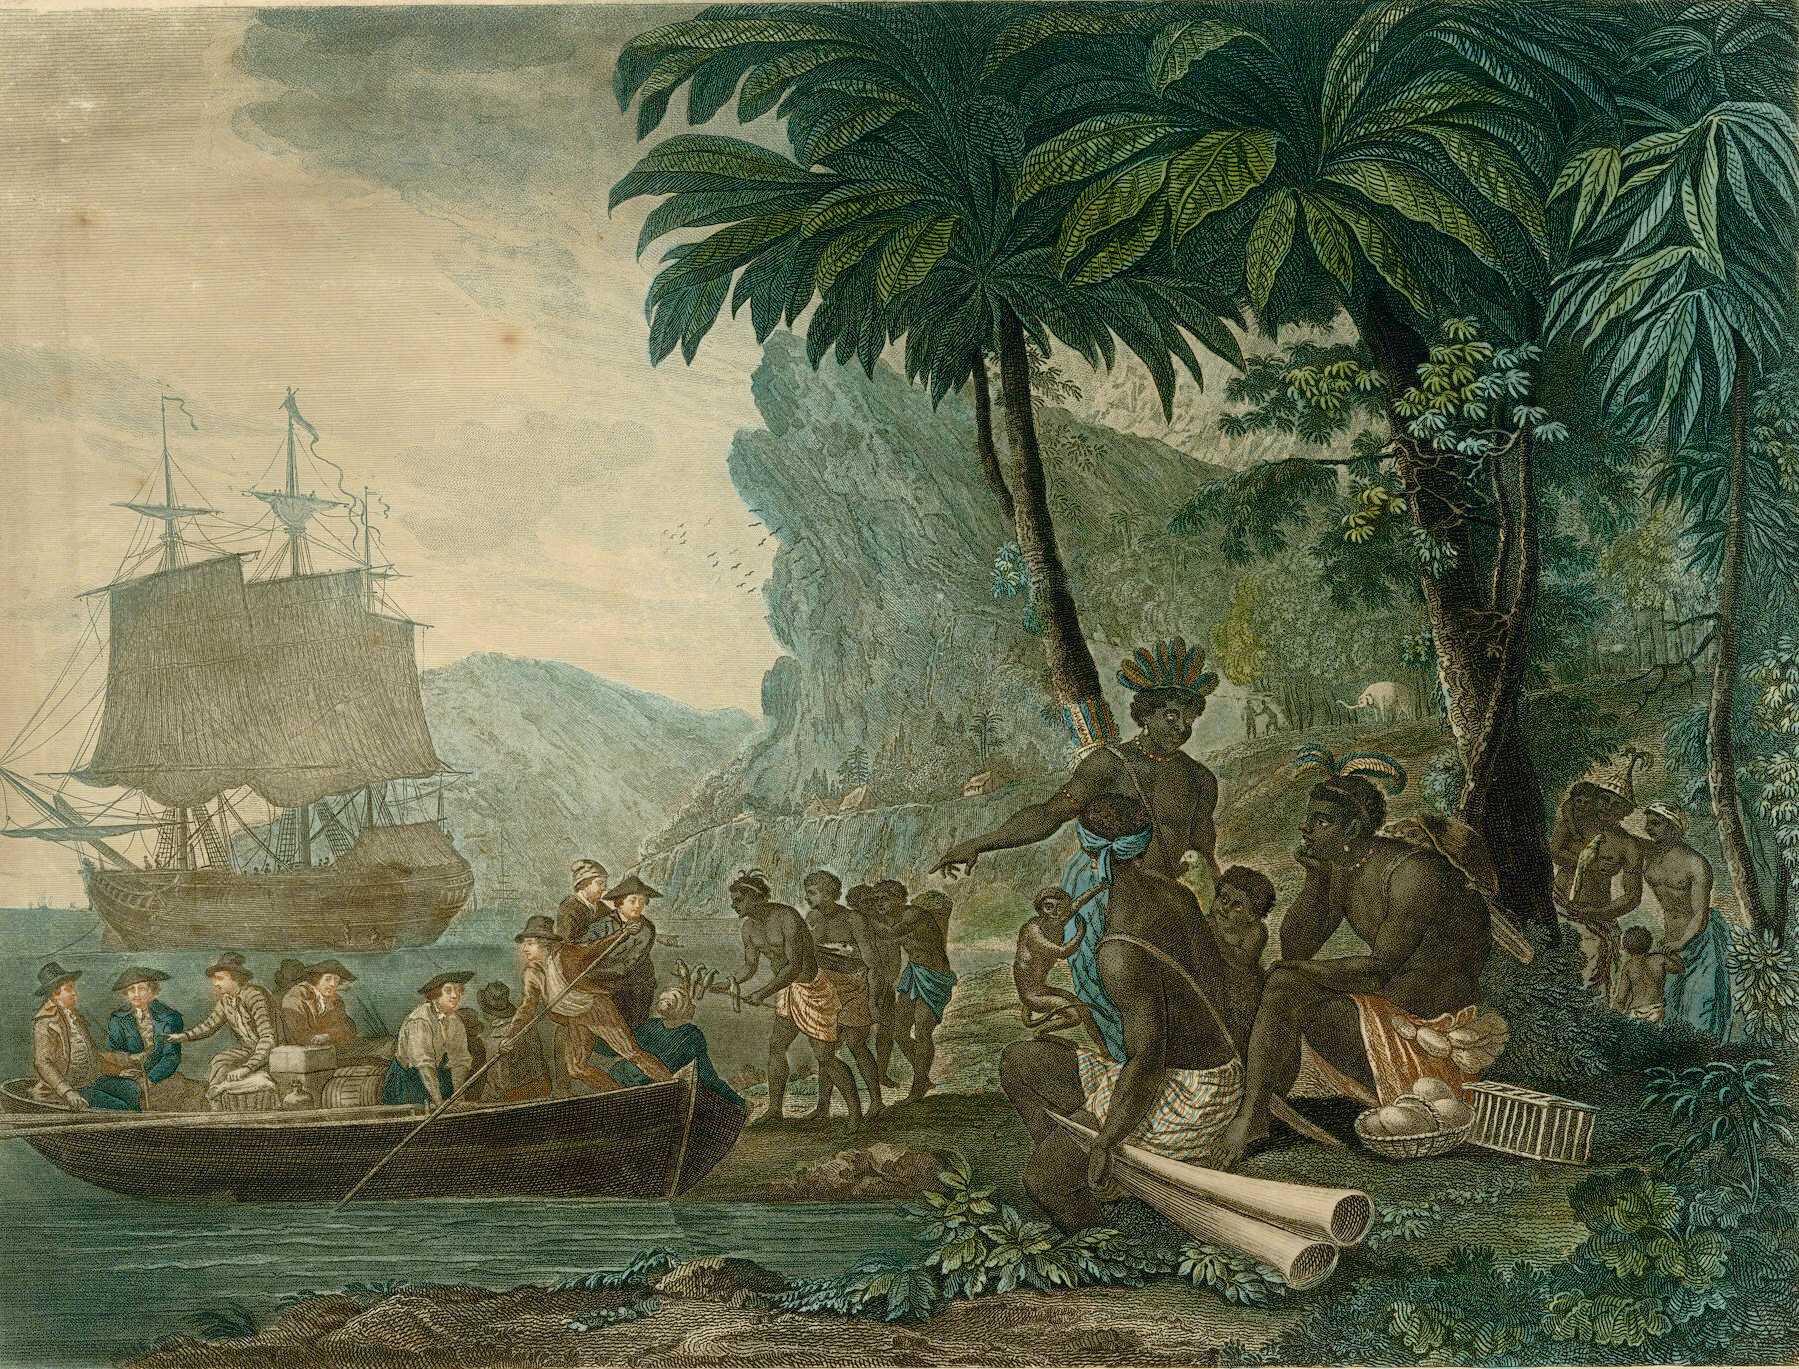 Illustration of European arrival on African coast